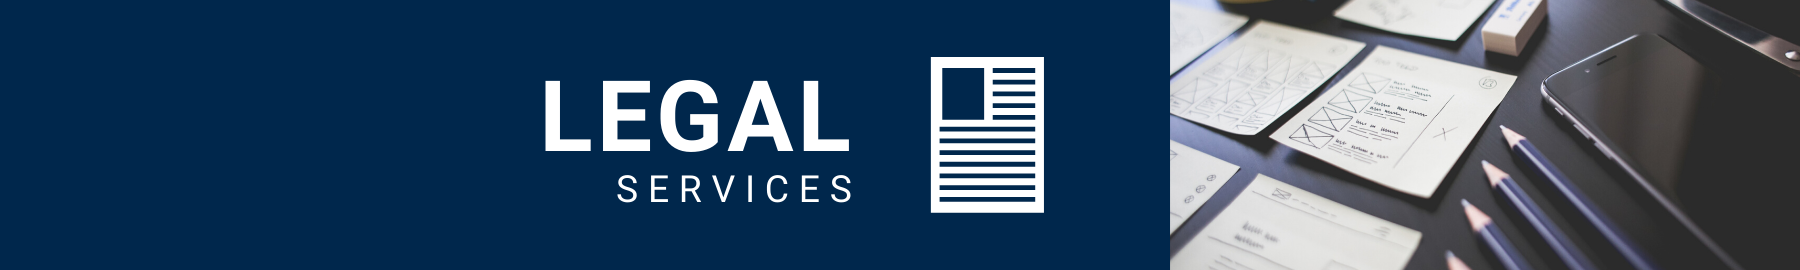 Legal Services Banner